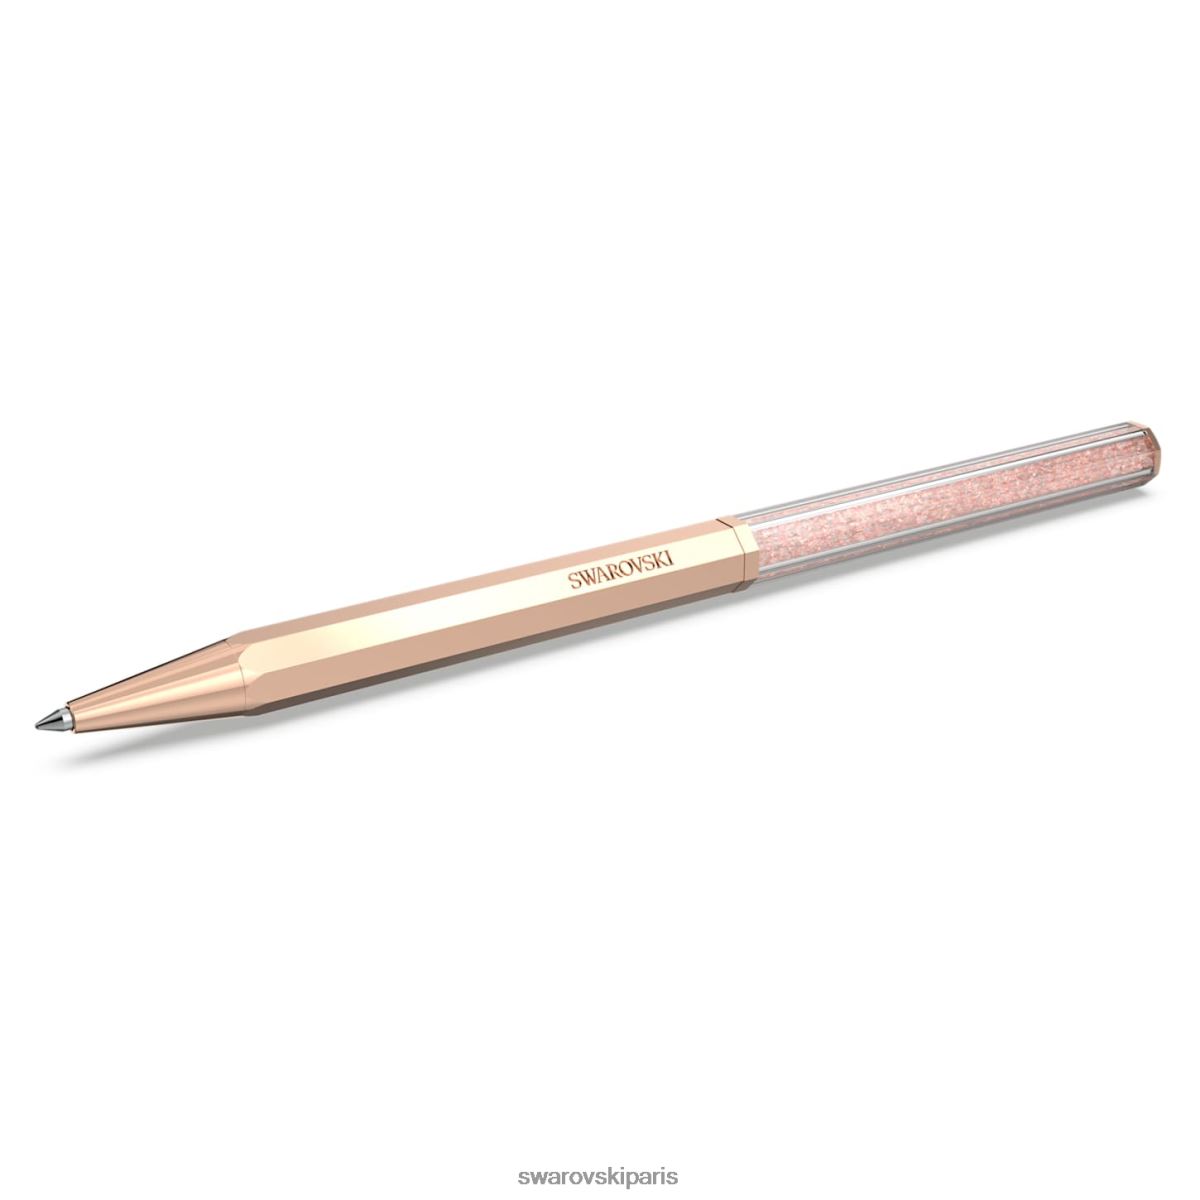 accessoires Swarovski stylo à bille cristallin forme octogonale, ton or rose, plaqué ton or rose RZD0XJ1258